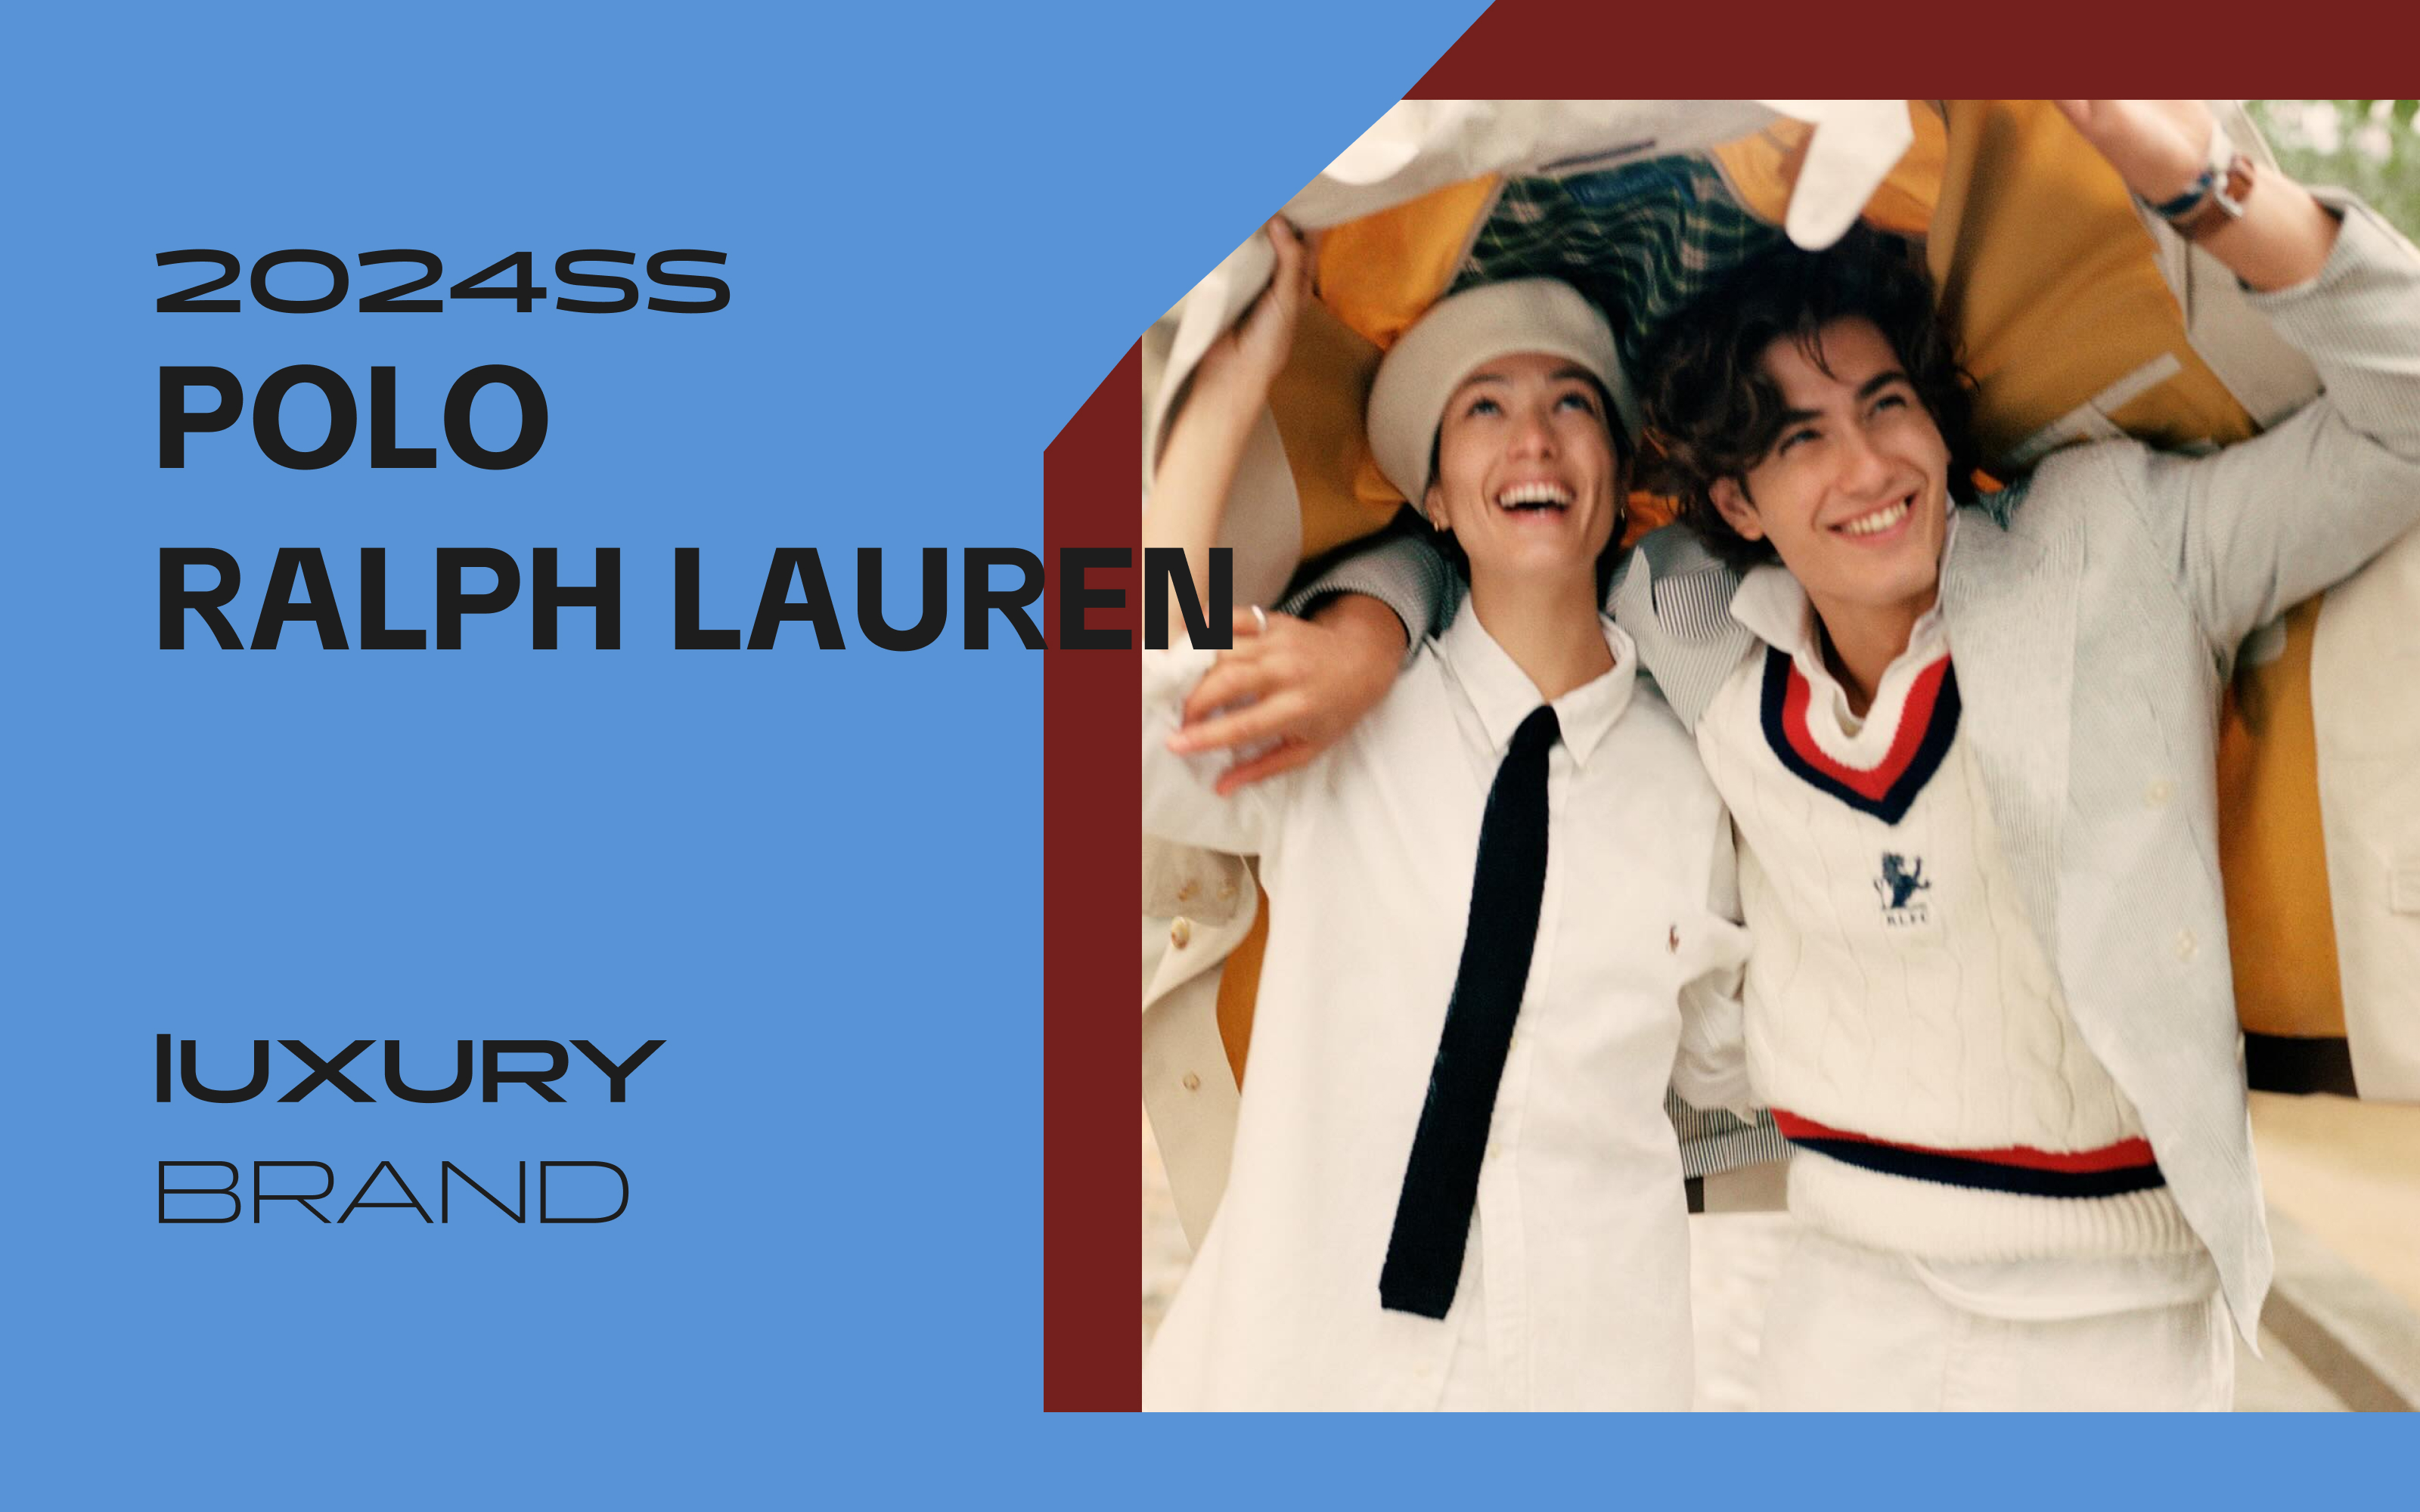 Polo Ralph Lauren -- The Analysis of Luxury Knitwear Brand